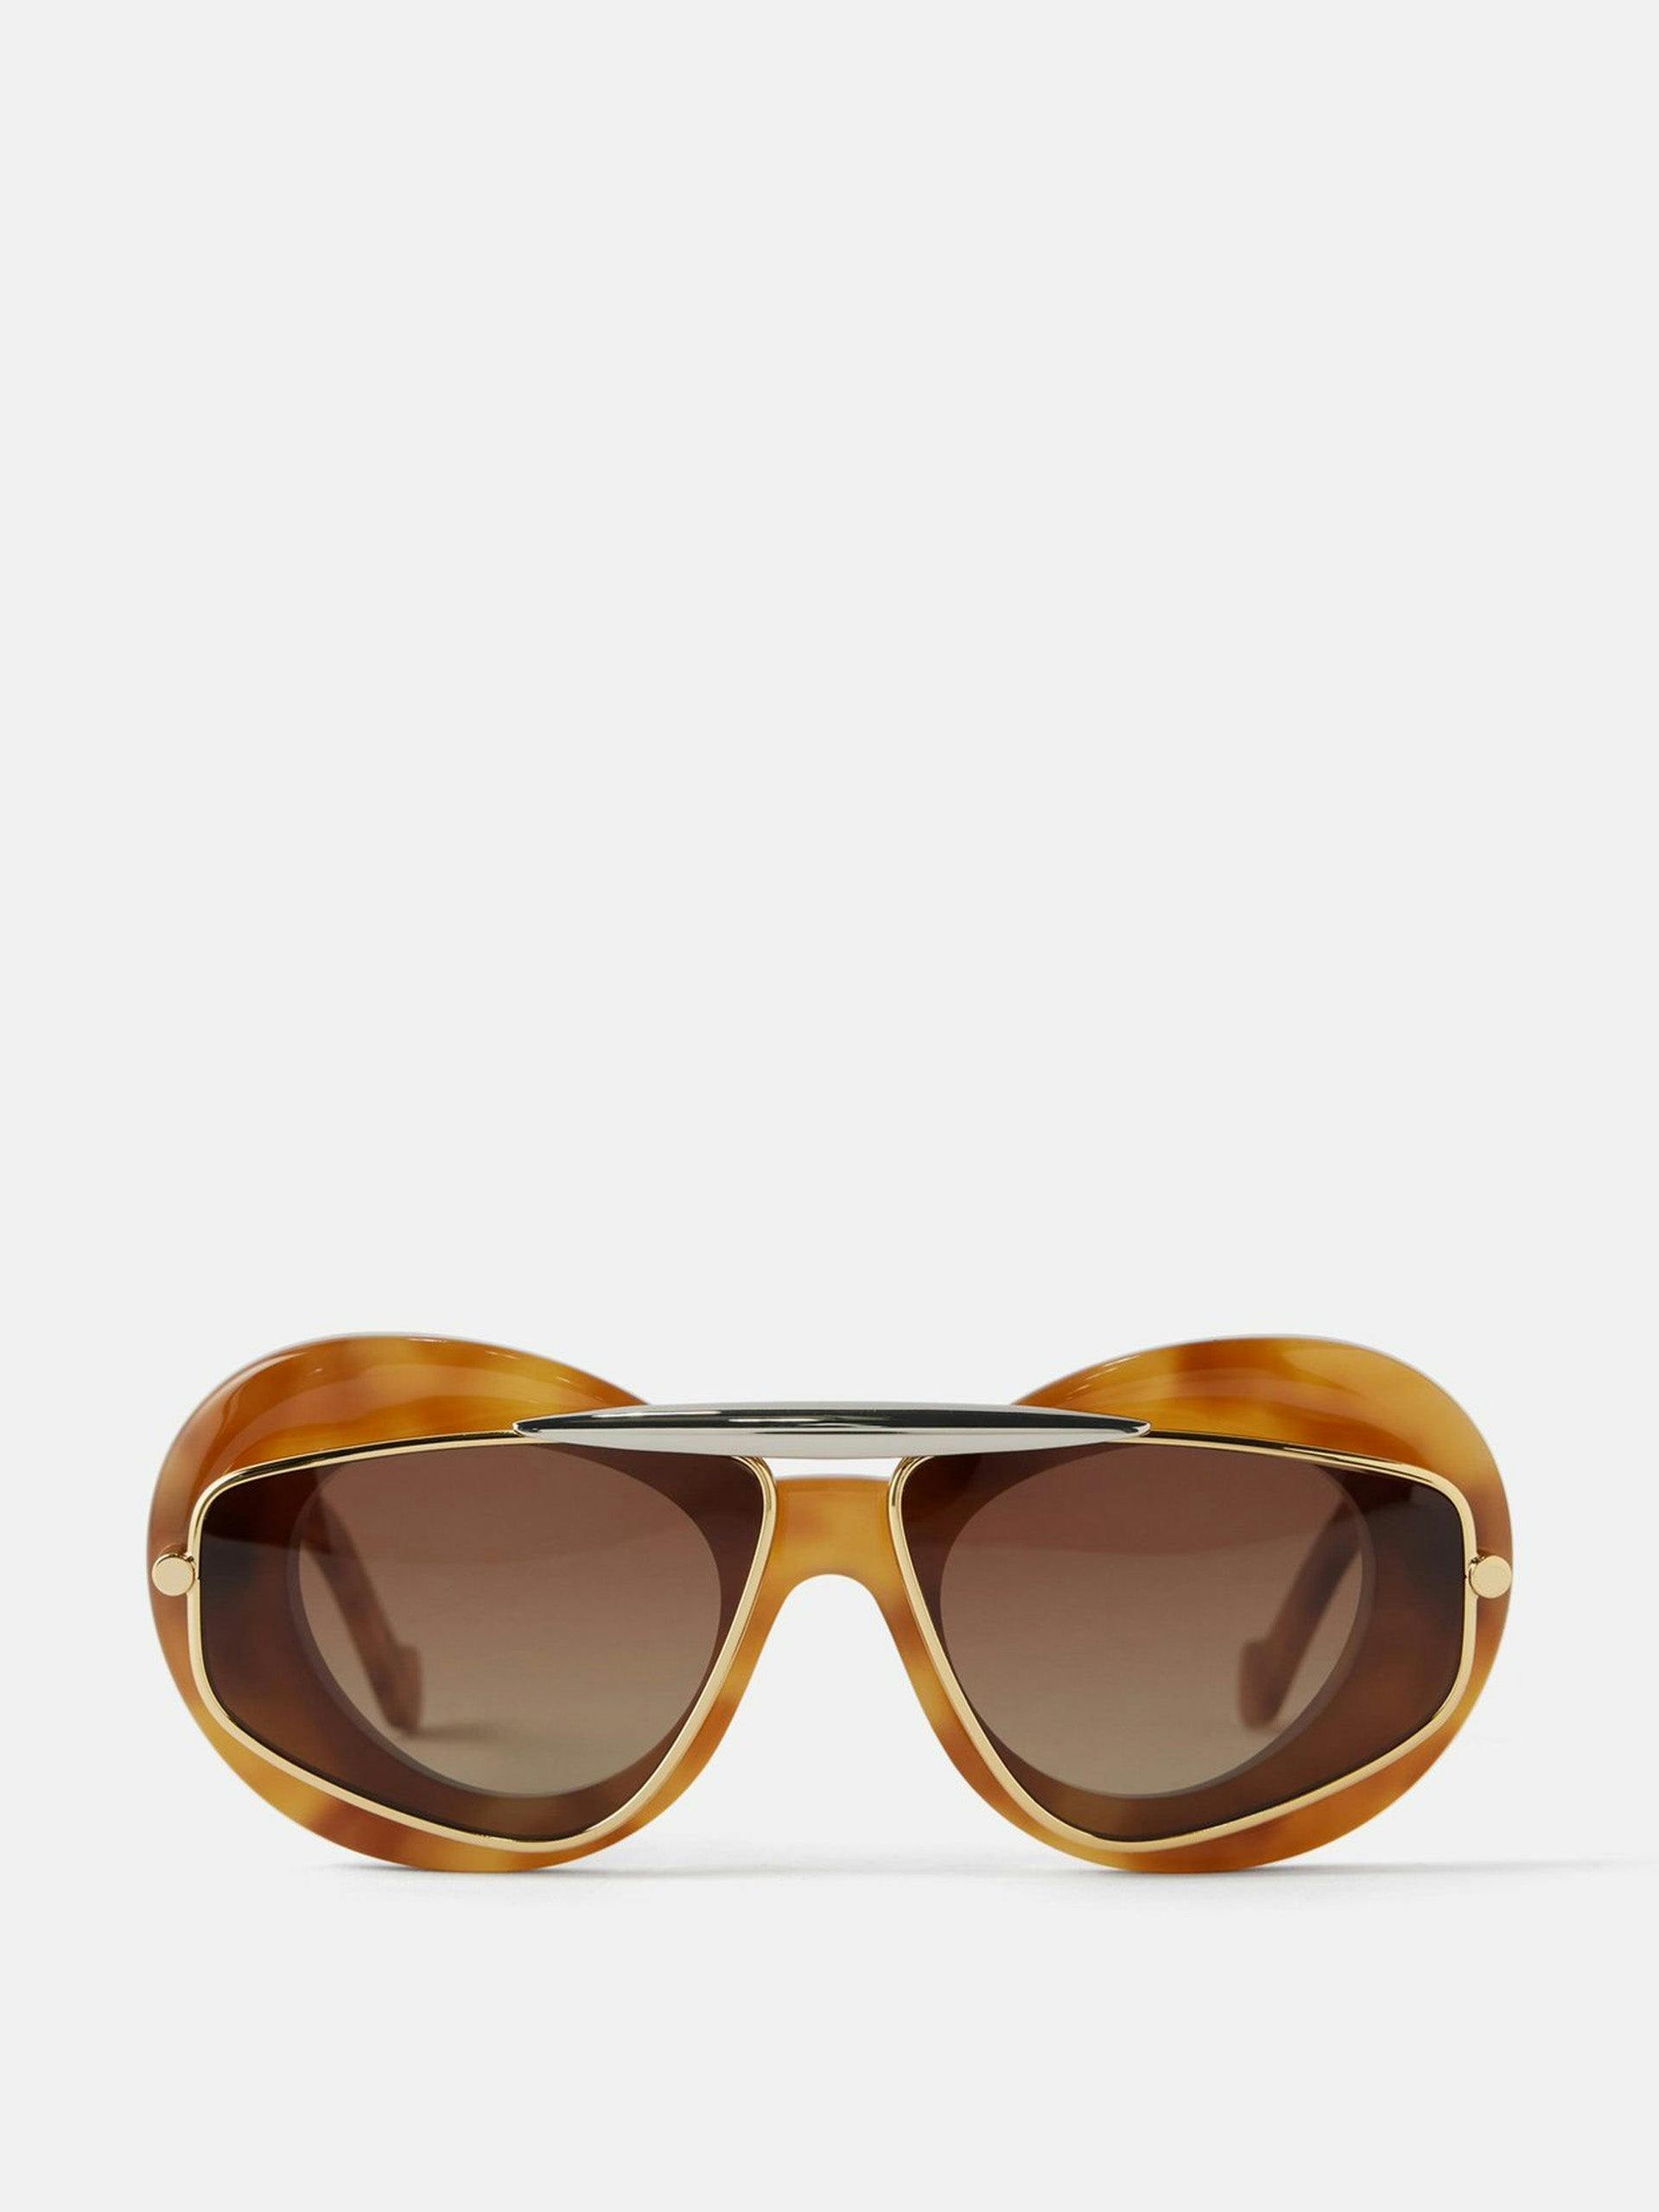 Double-frame round acetate sunglasses